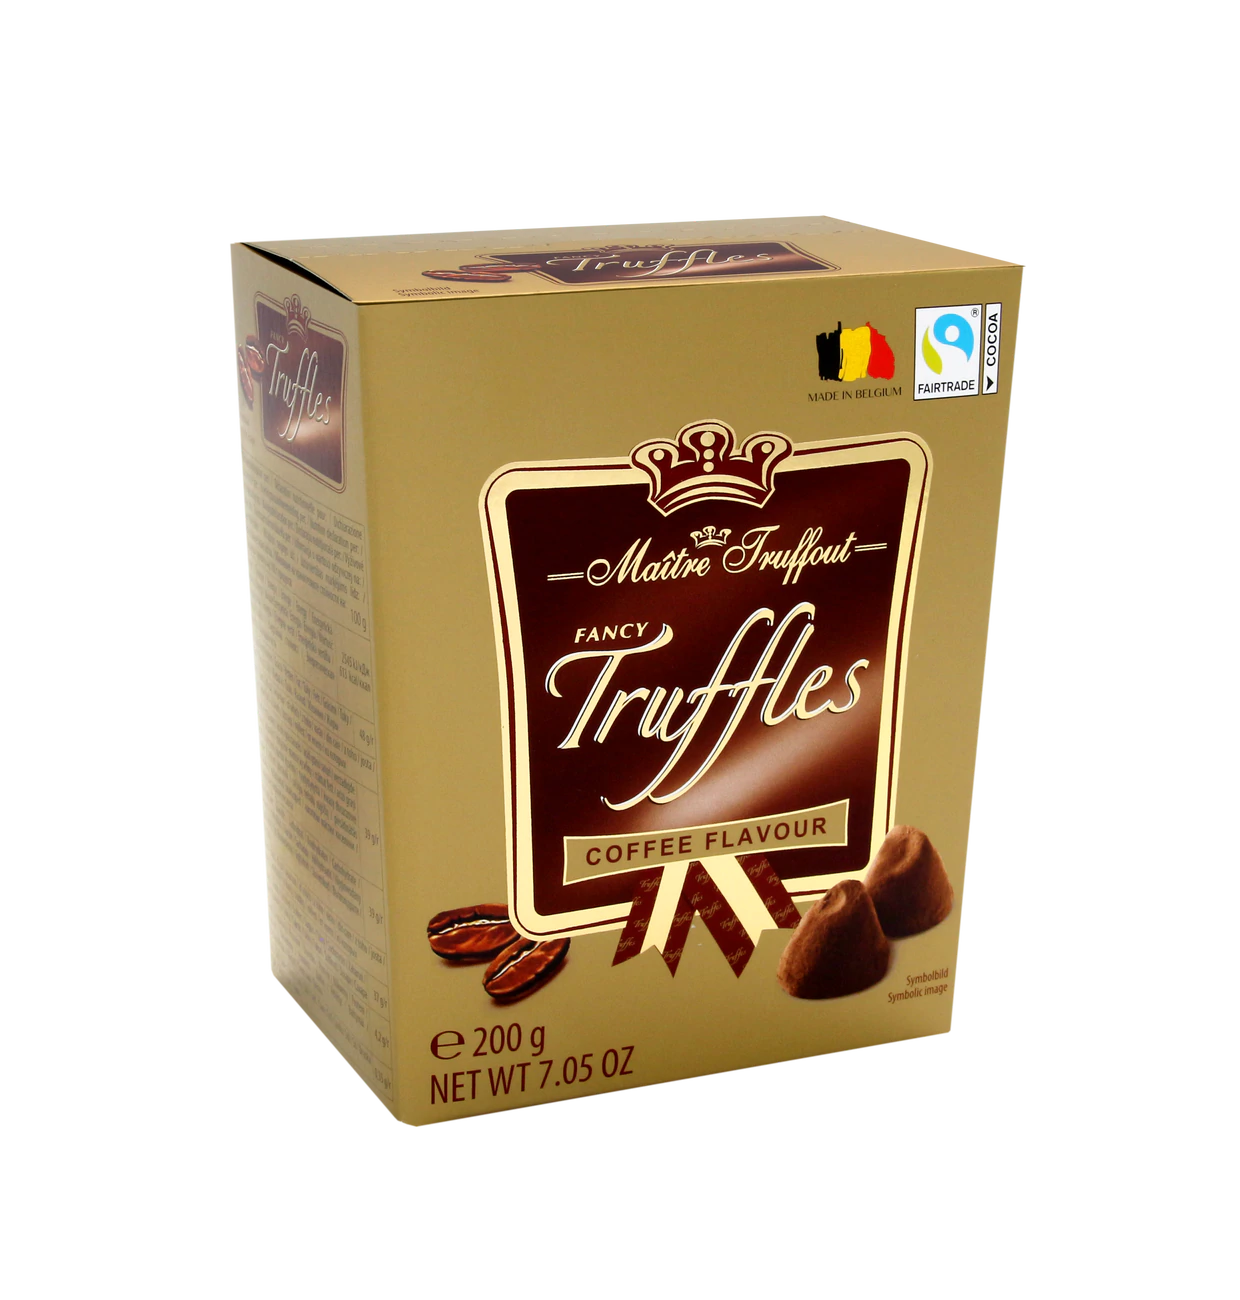 Fancy Gold Truffles Kaffee 200g MHD: 15.07.25